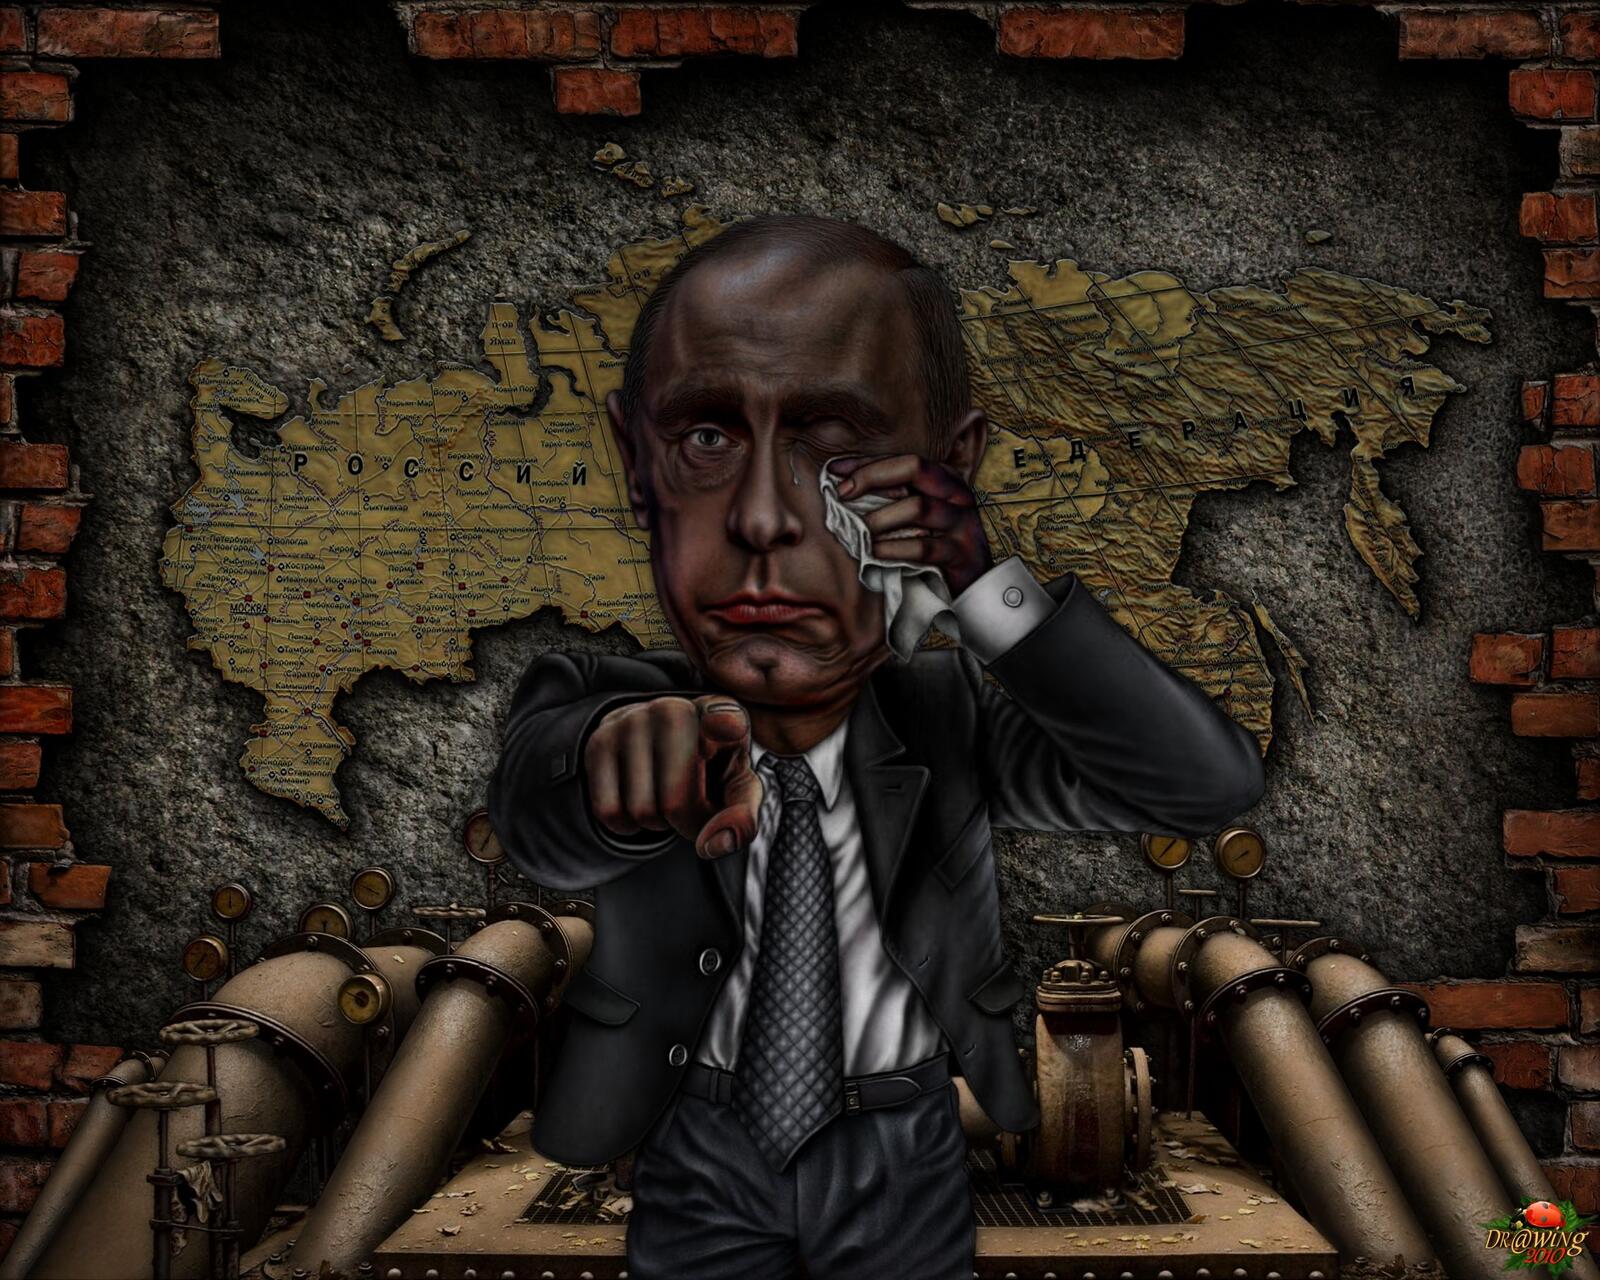 Wallpapers Putin Russia trumpet on the desktop